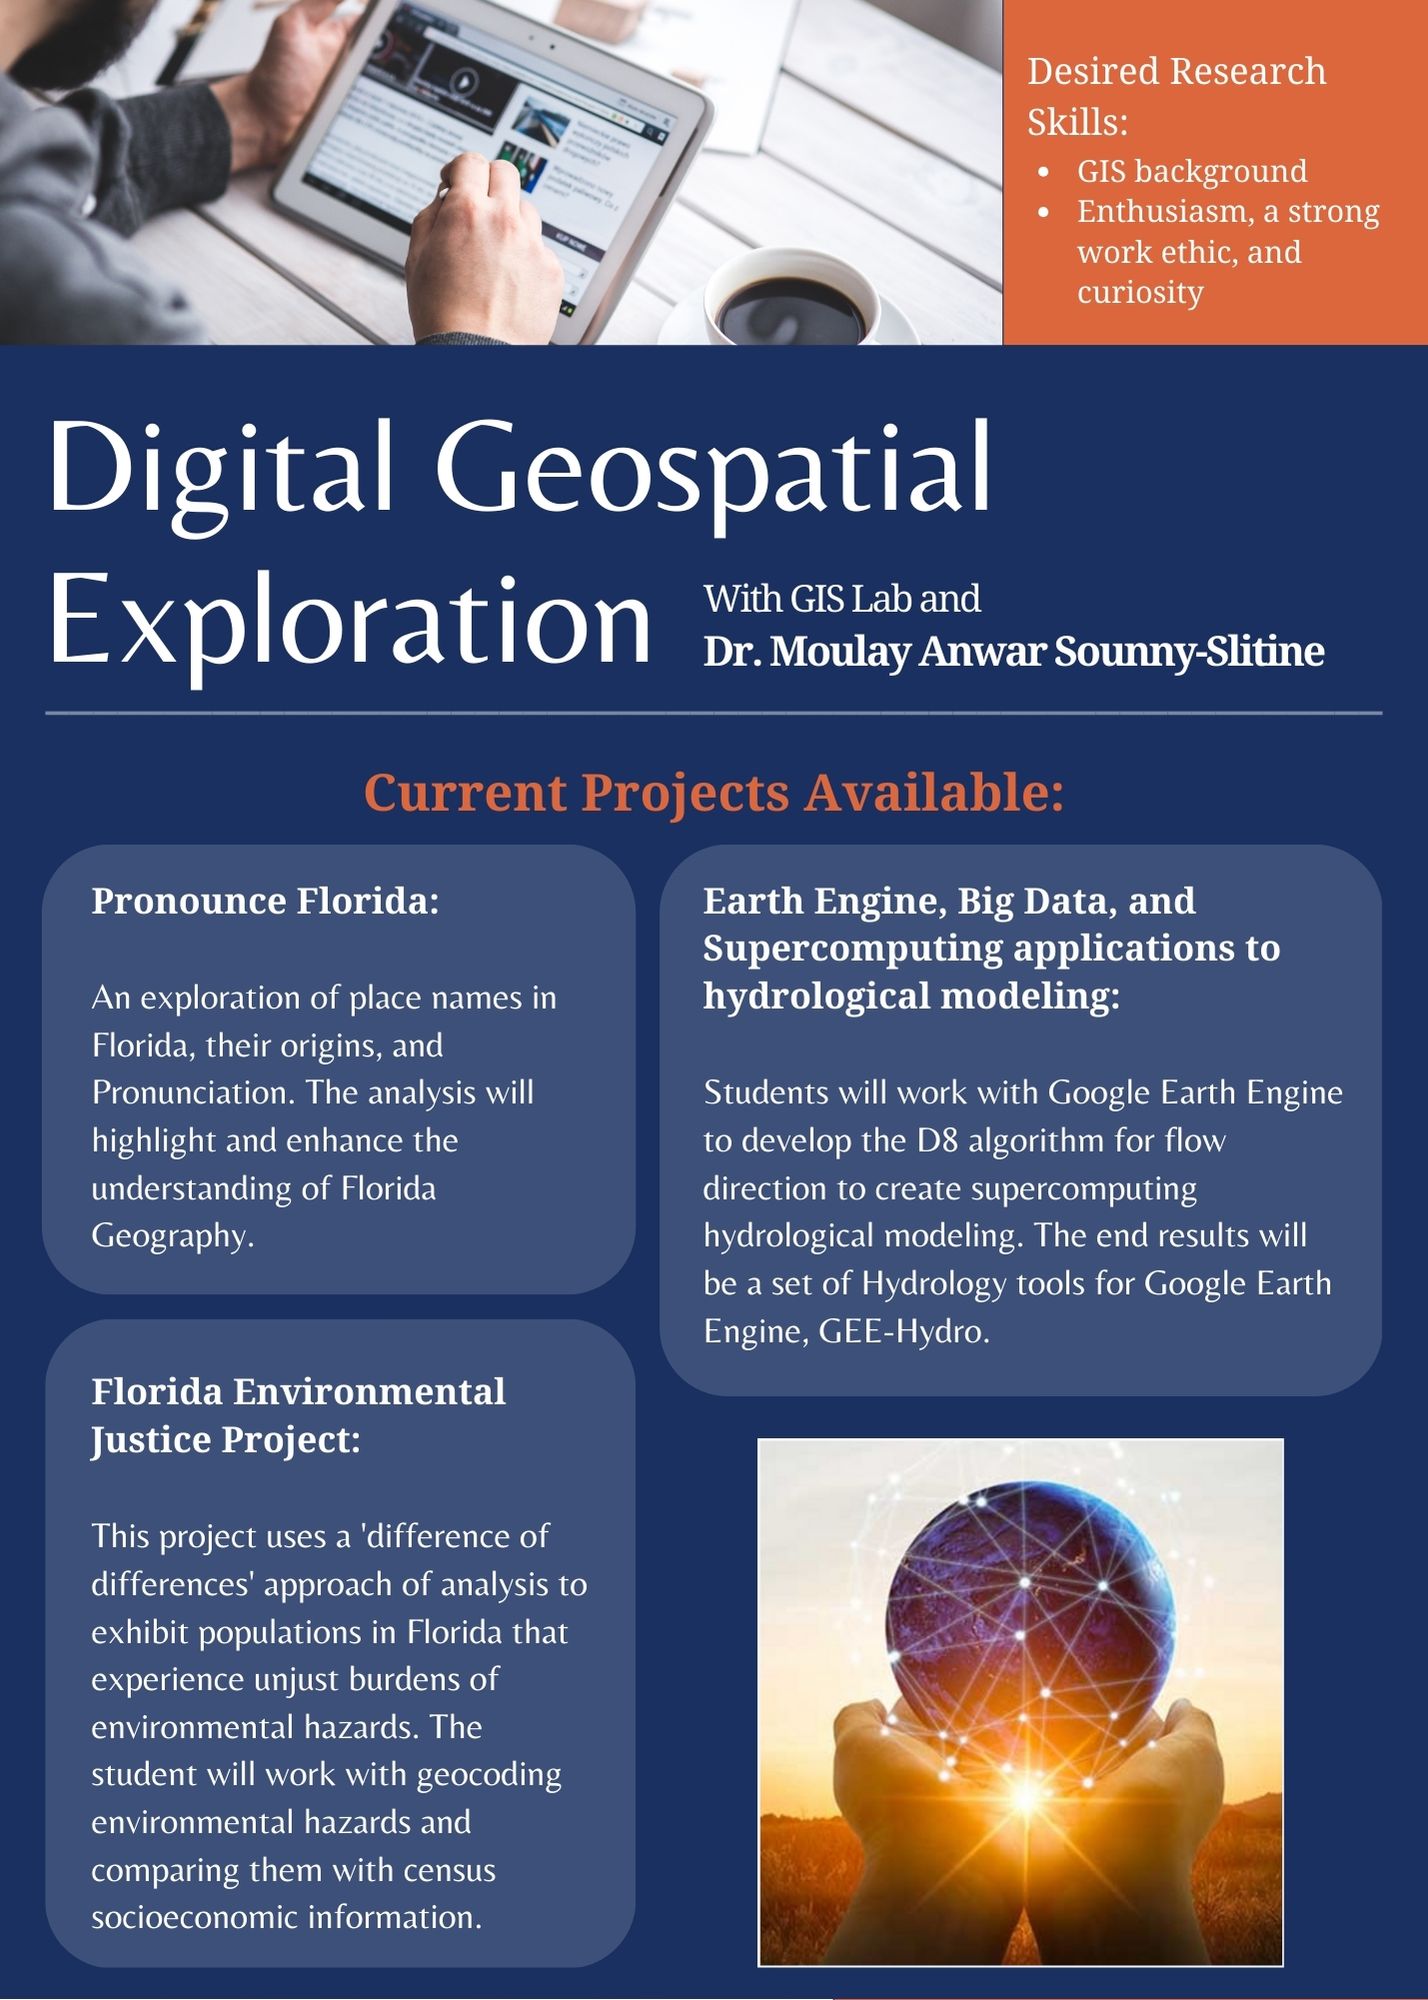 Digital Geospatial Exploration with Dr. Anwar Sounny-Slitine